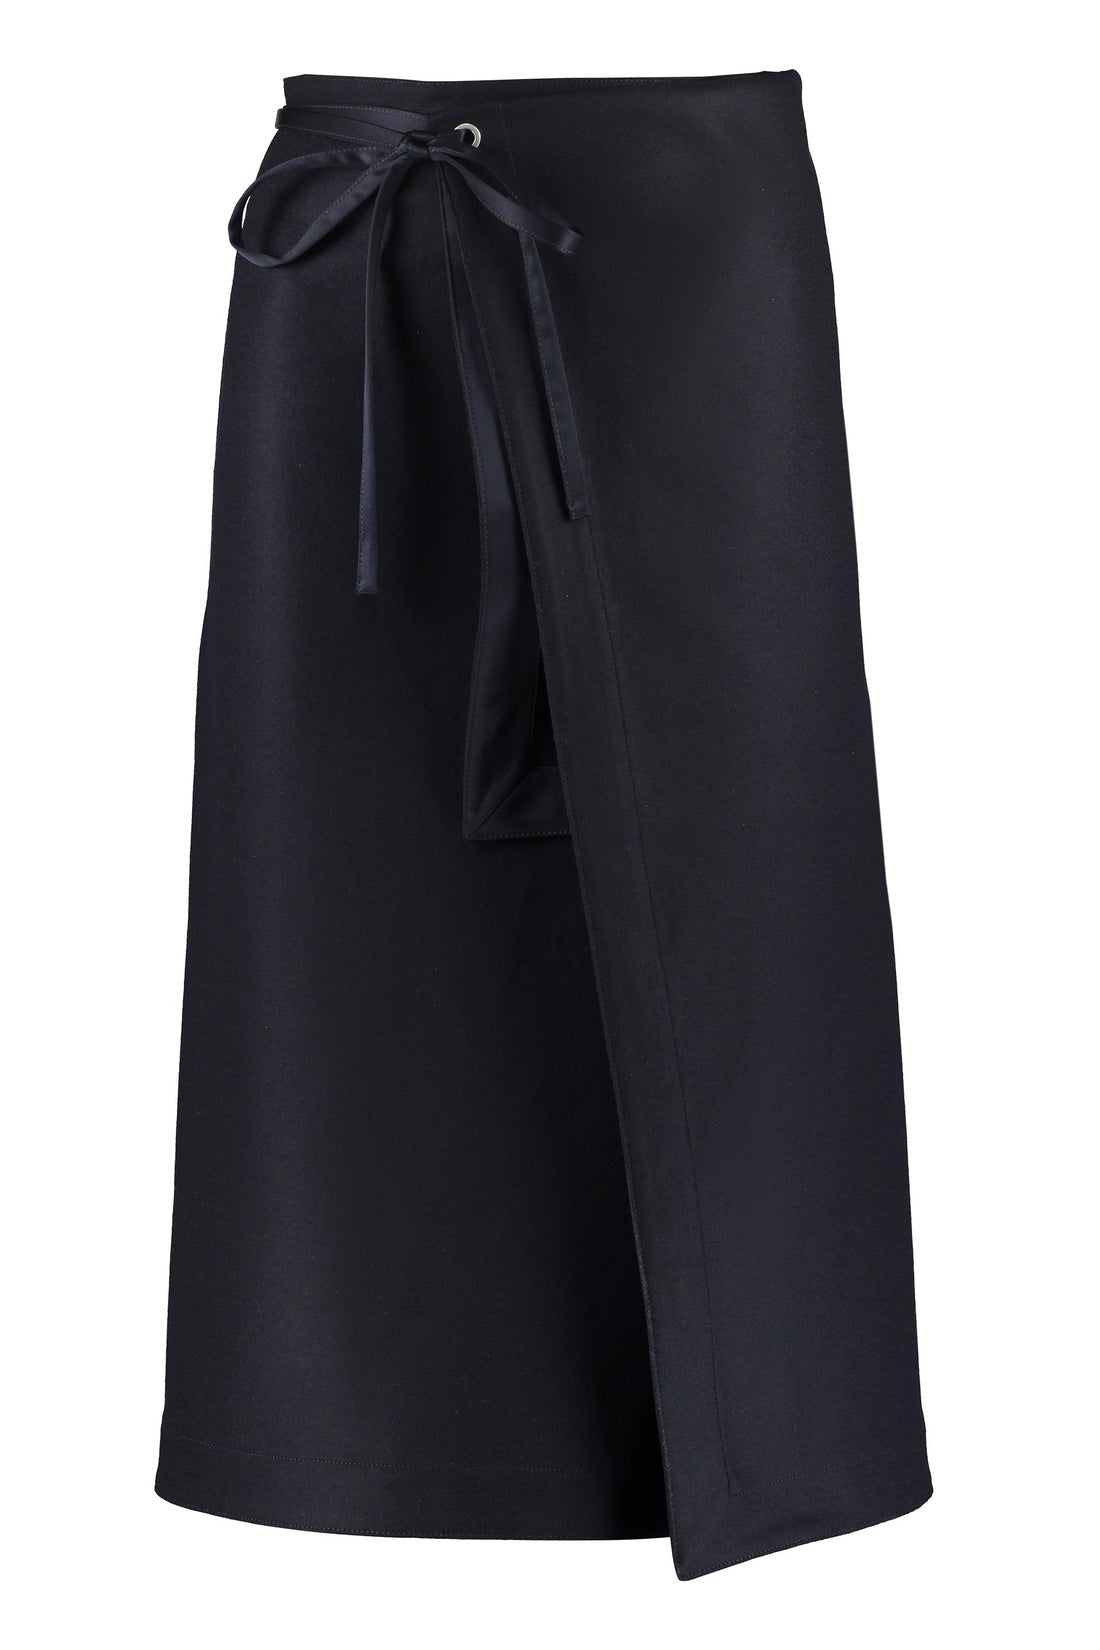 Jil Sander-OUTLET-SALE-Wool wrap skirt-ARCHIVIST